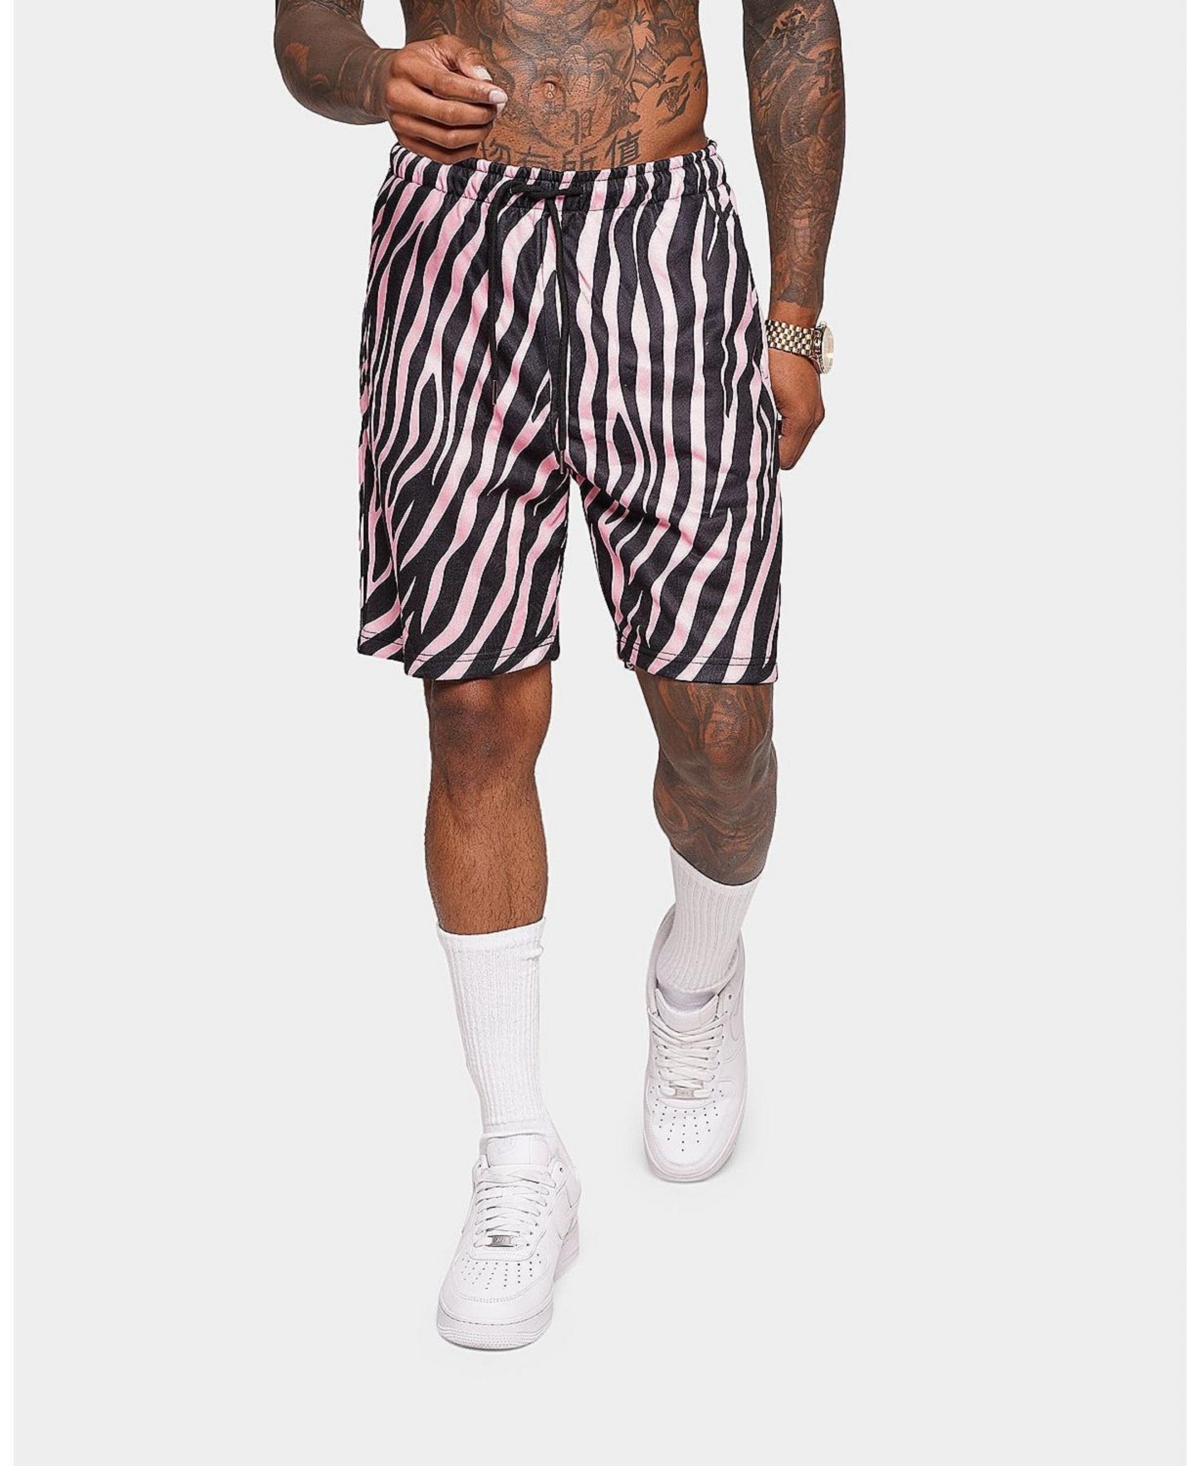 Mens Nasiim Zebra Shorts - Pink/black